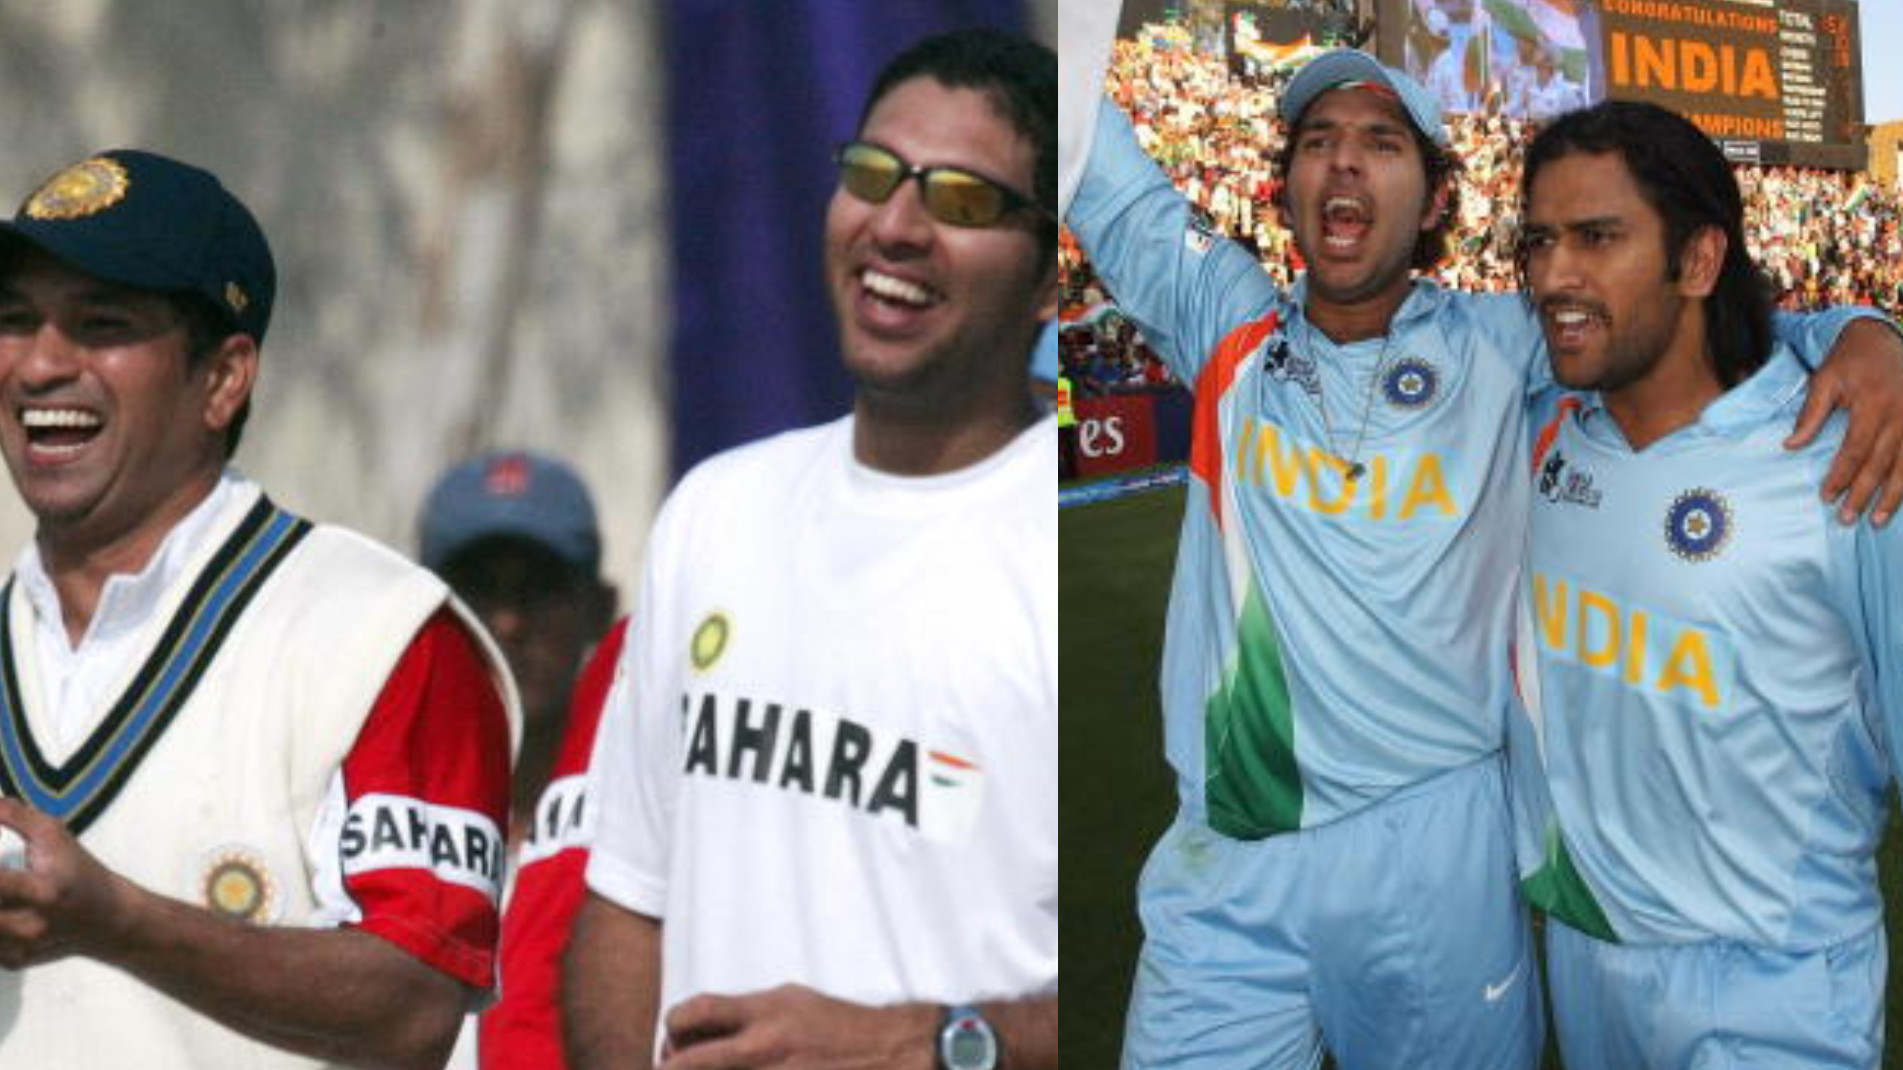 Supporting Sachin Tendulkar in Greg Chappell saga cost me India captaincy- Yuvraj Singh